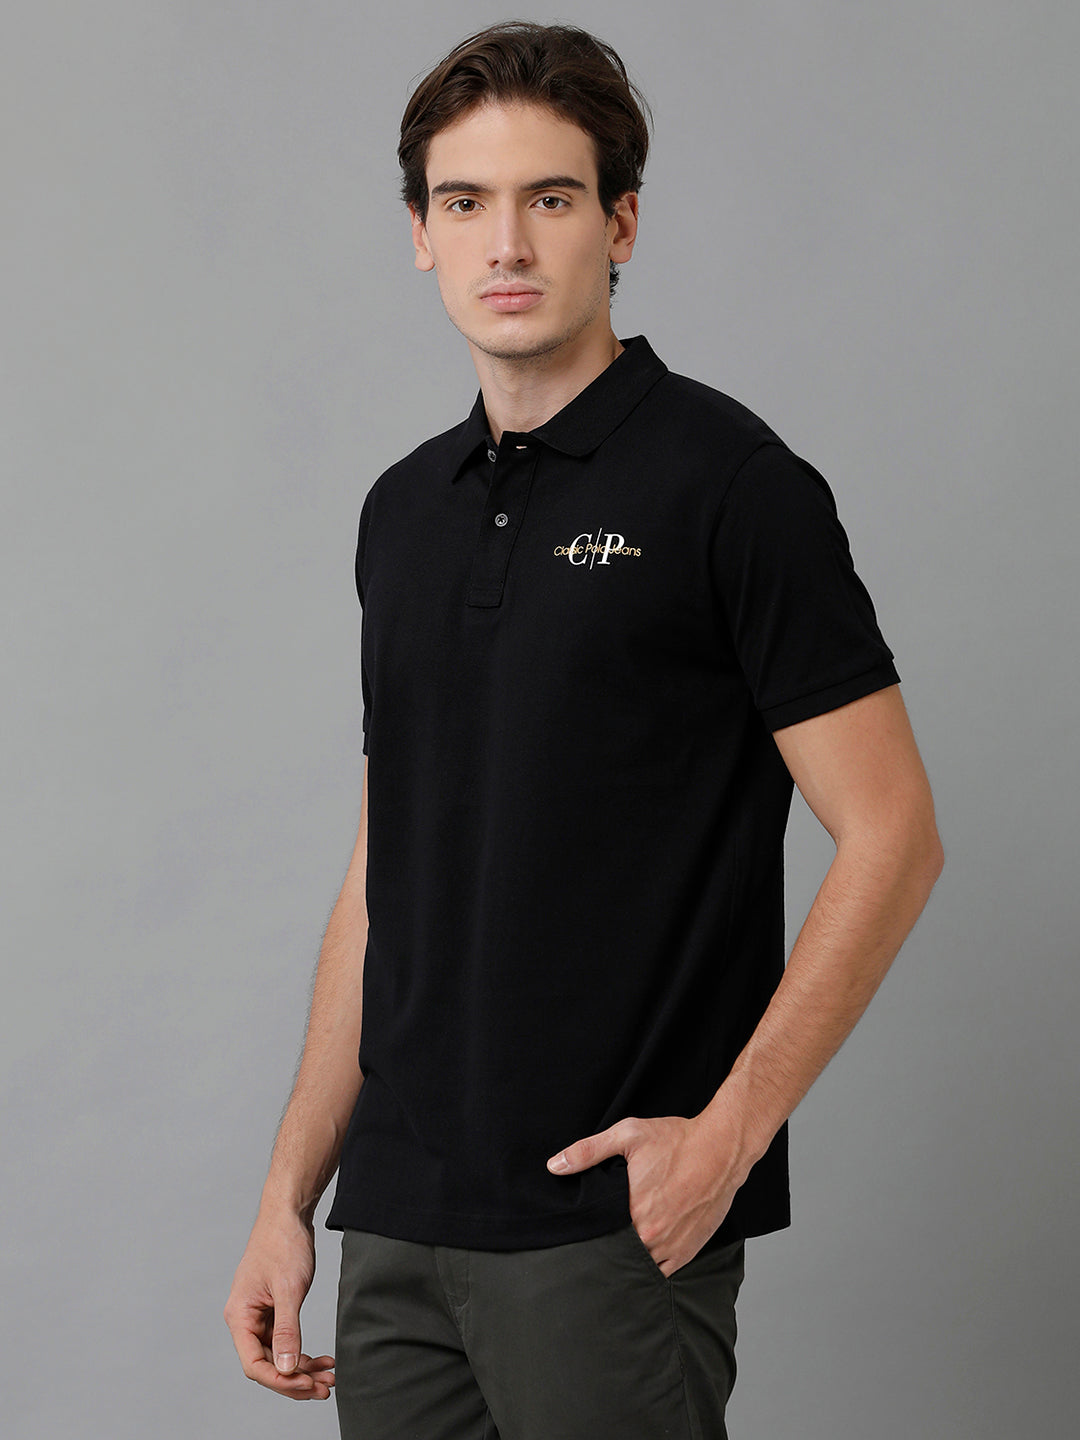 Classic Polo Men's Cotton Solid Half Sleeve Slim Fit Polo Neck Black Color T-Shirt | Prm - 768 A